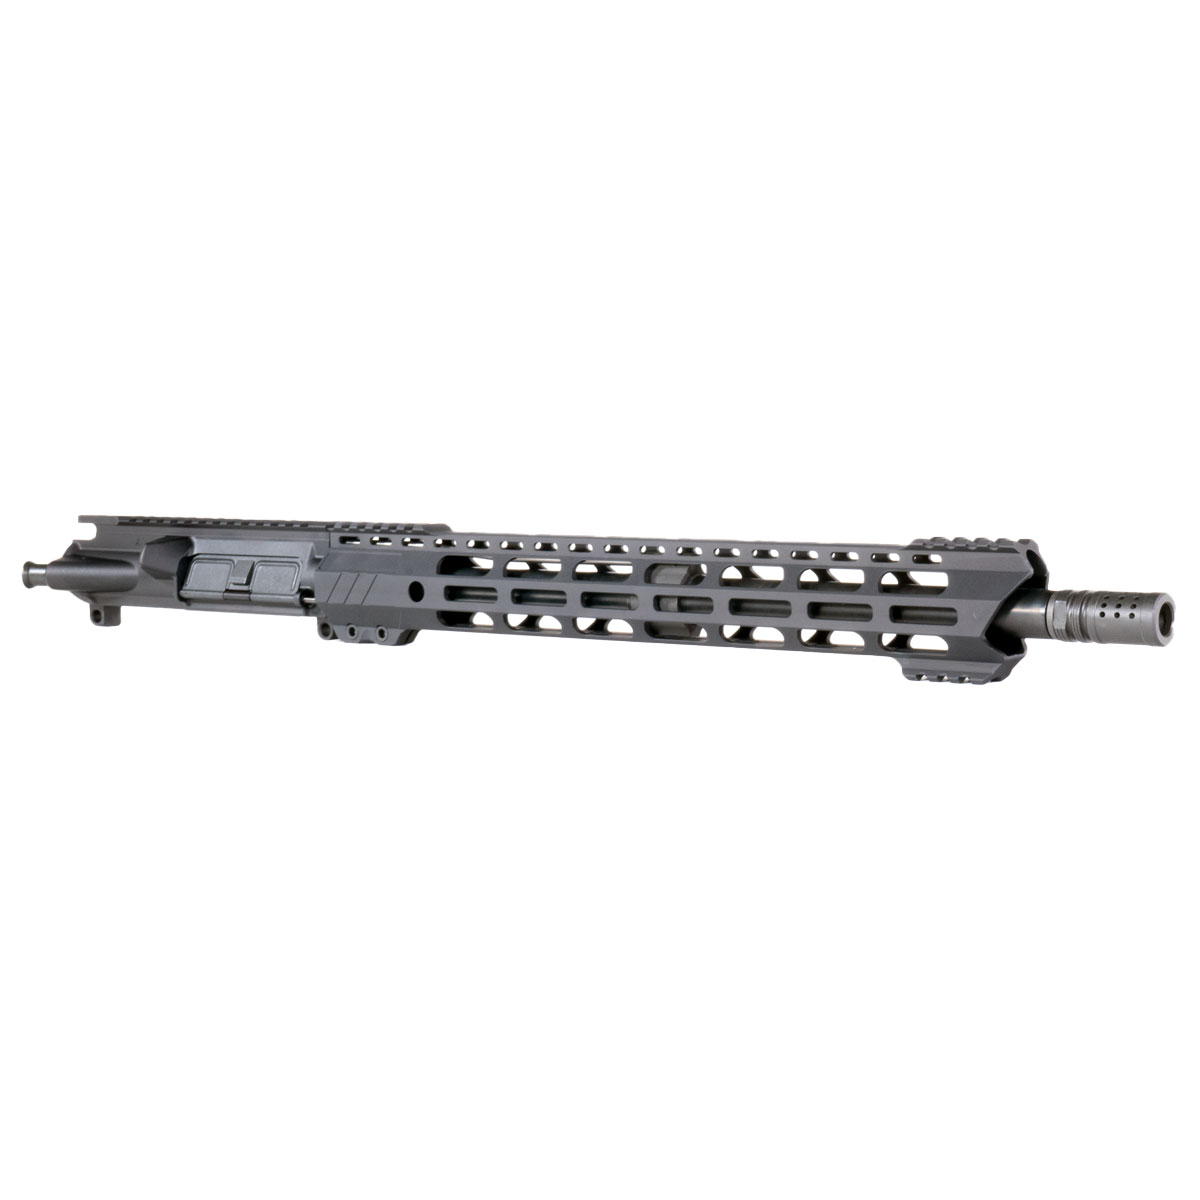 DDS 'Phantom Leap' 16-inch AR-15 .458 SOCOM Nitride Rifle Upper Build Kit